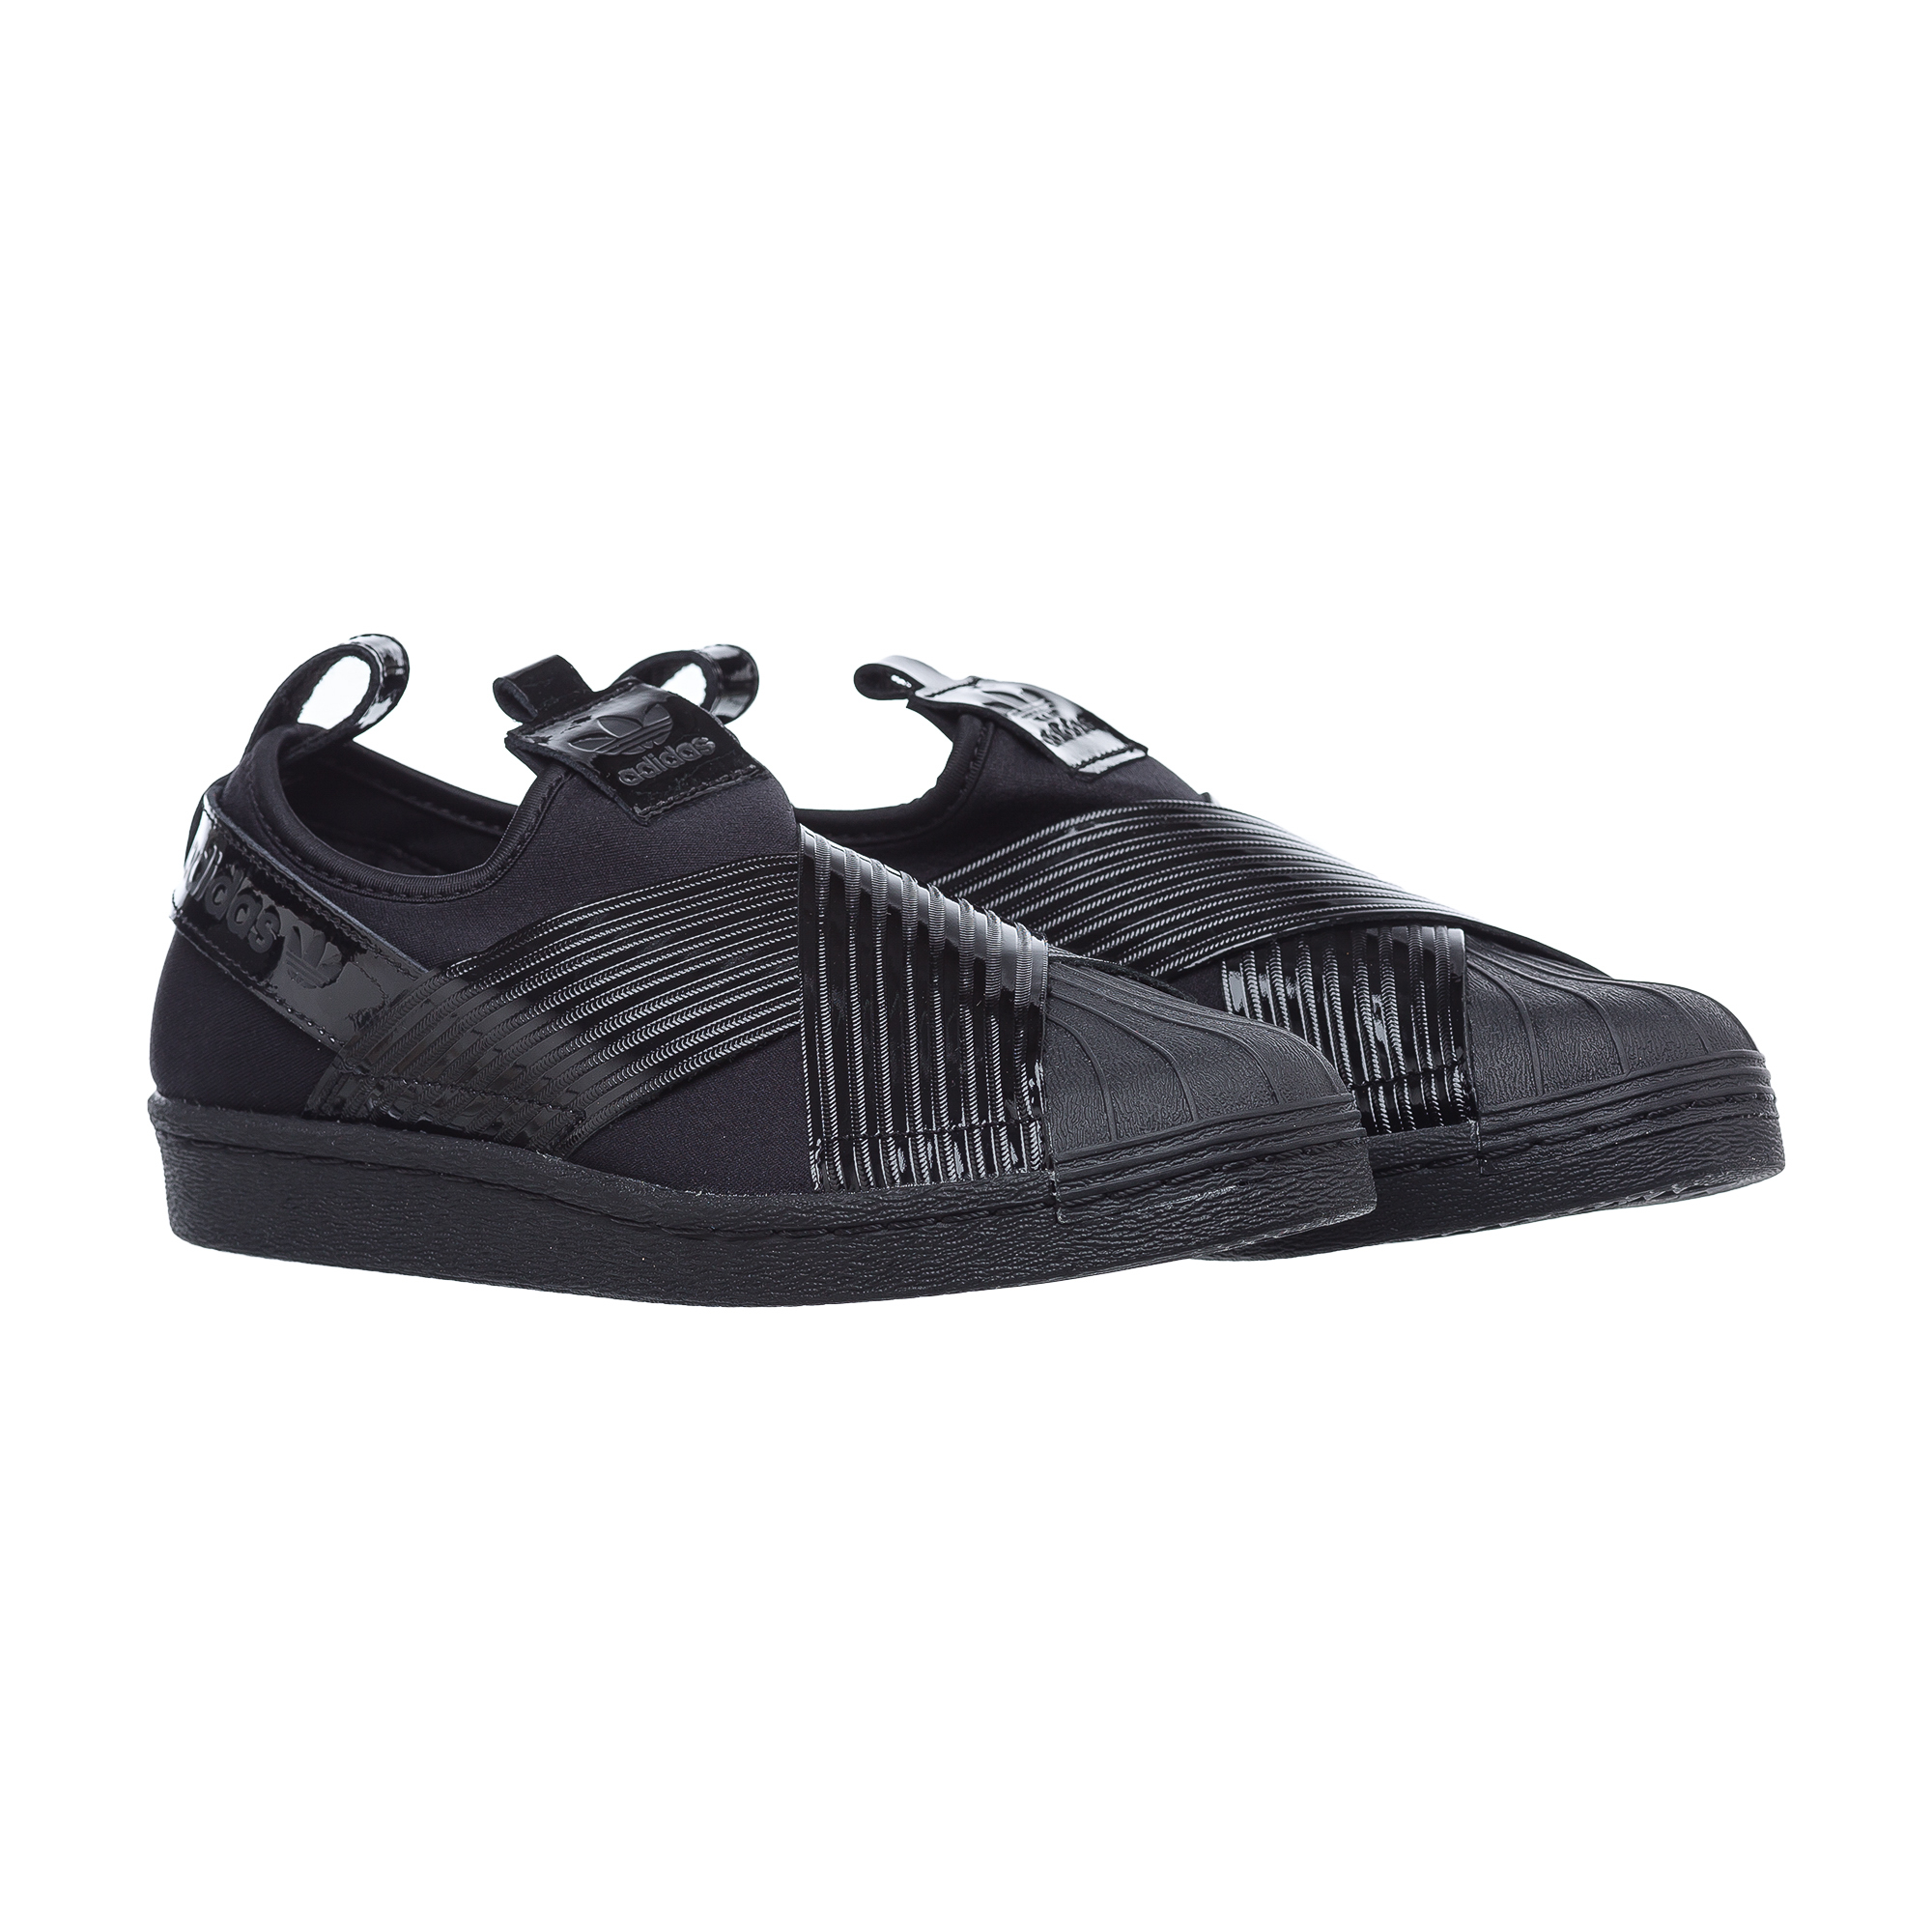 Superstar Slip On Adidas, размер 37, цвет черный ADBD8055 - фото 2